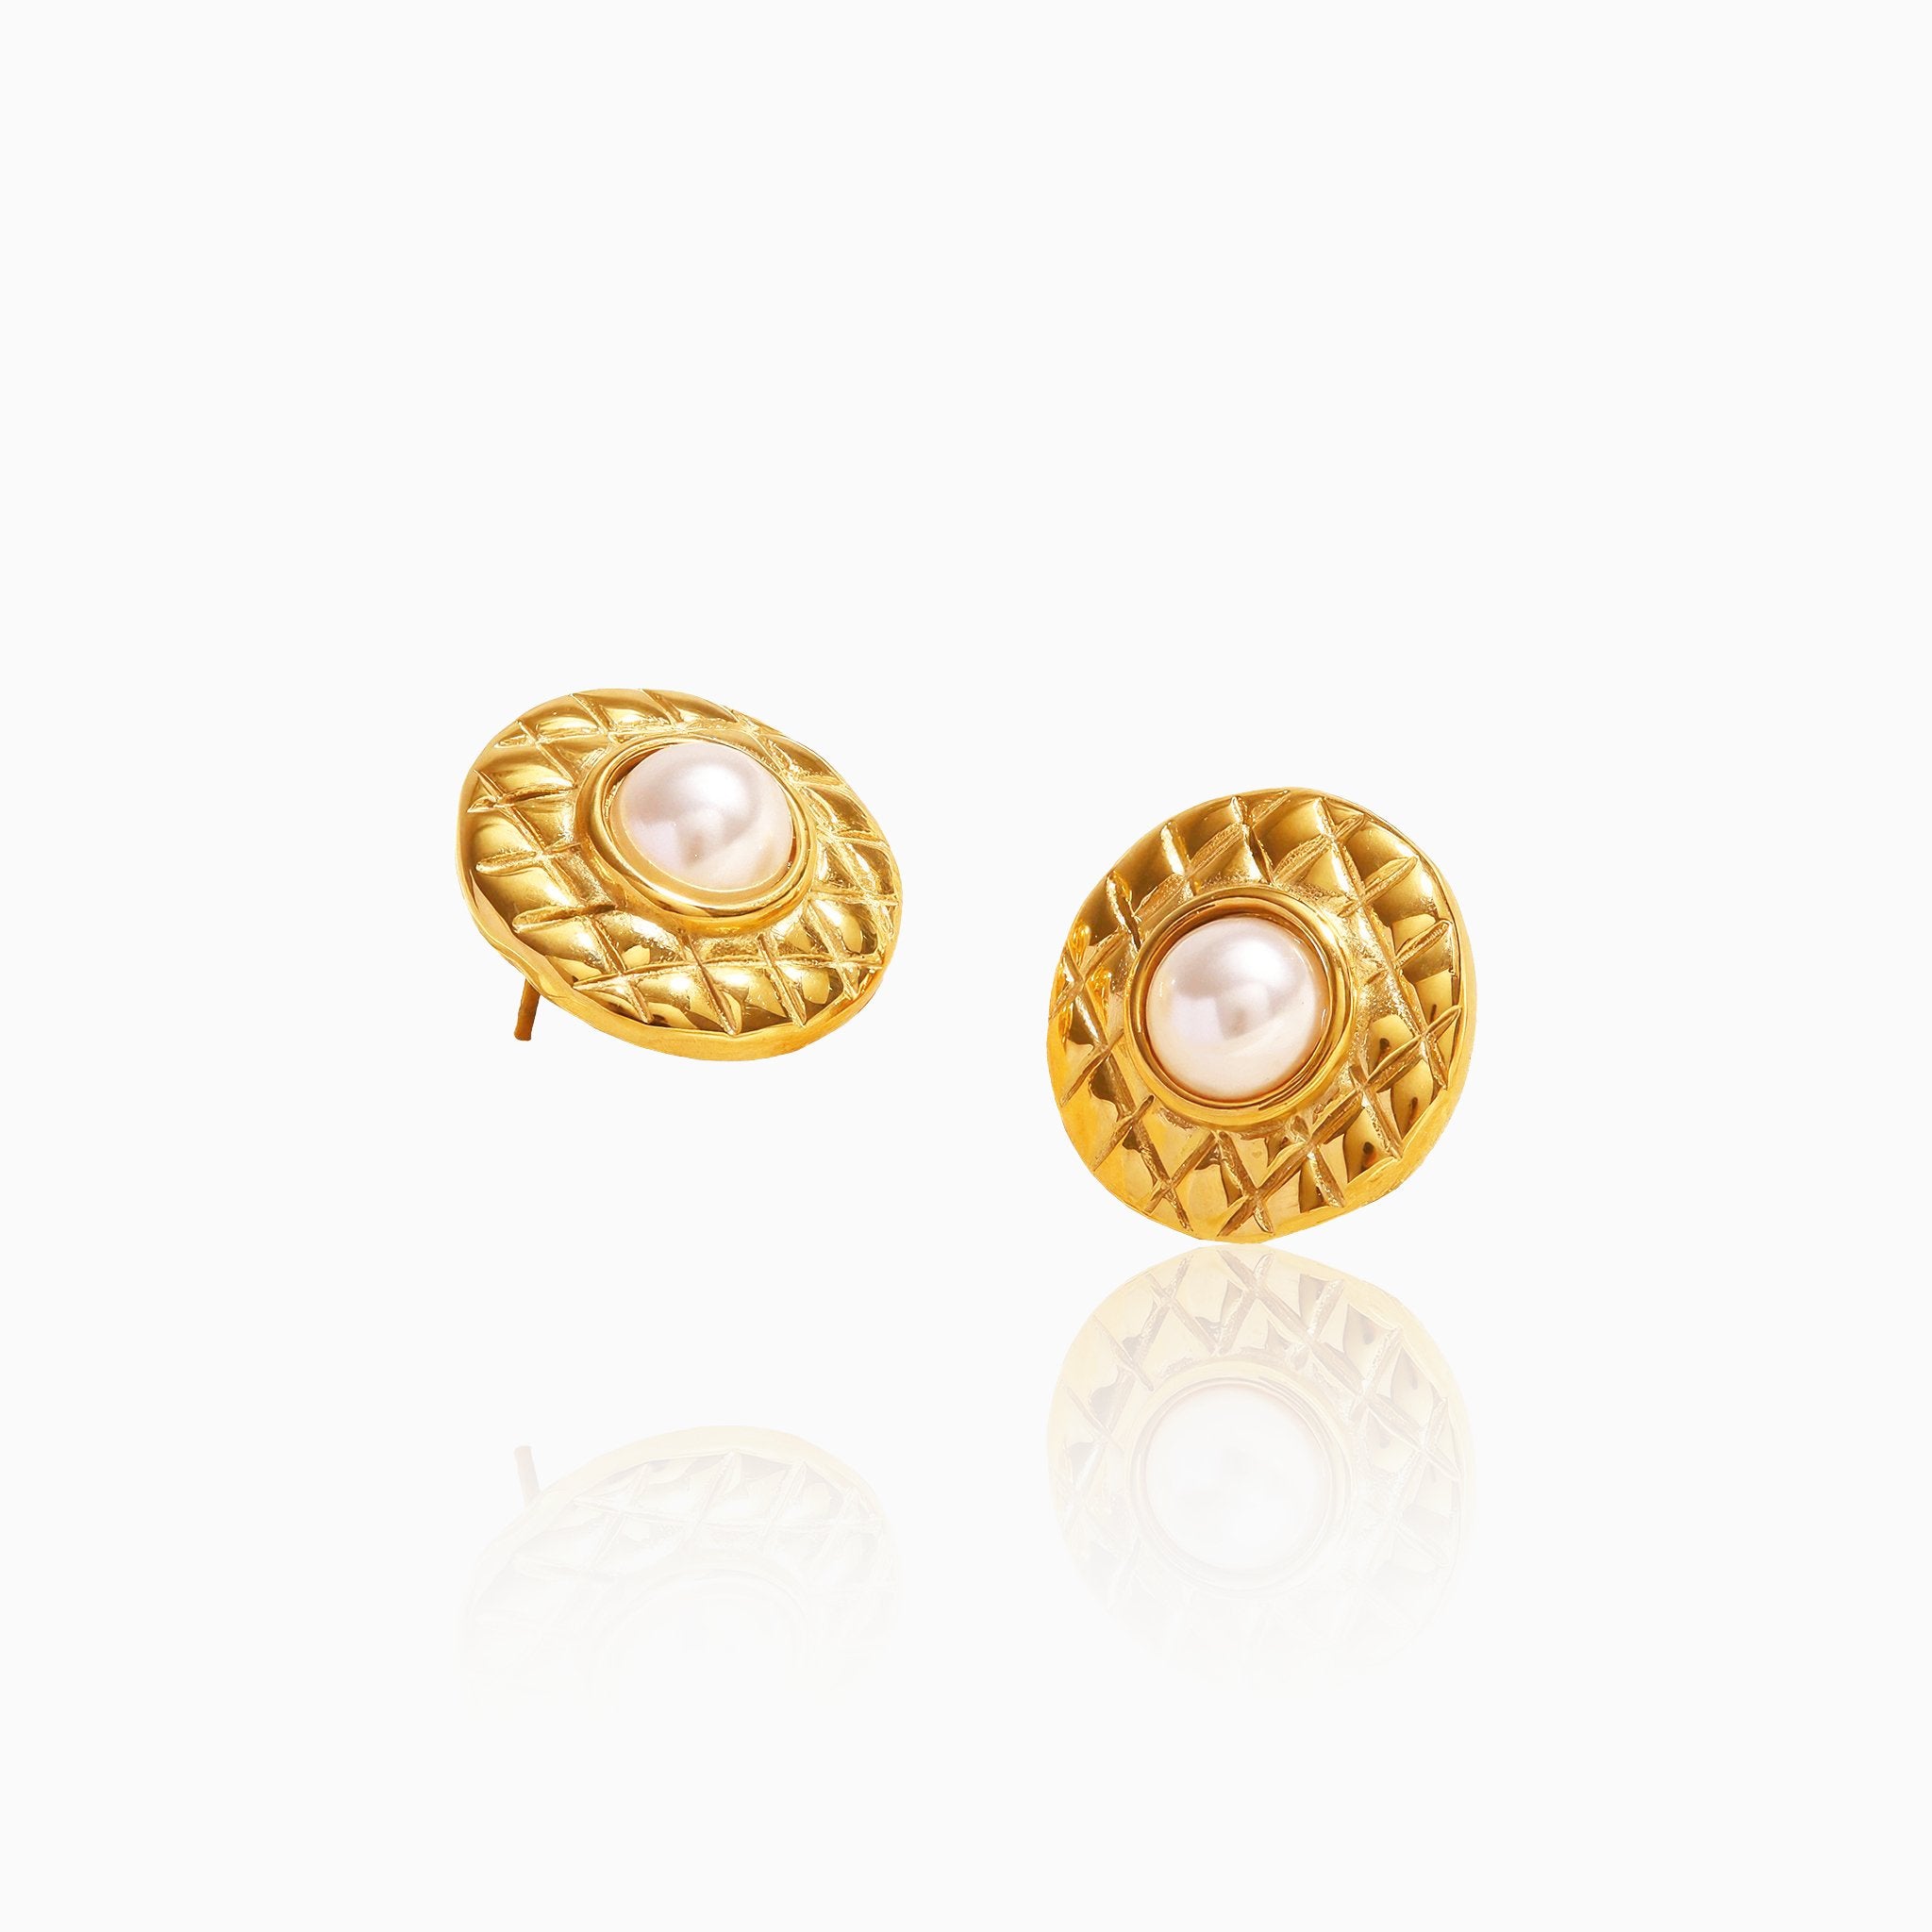 Diamond-Pattern Pearl Earrings - Nobbier - Earrings - 18K Gold And Titanium PVD Coated Jewelry